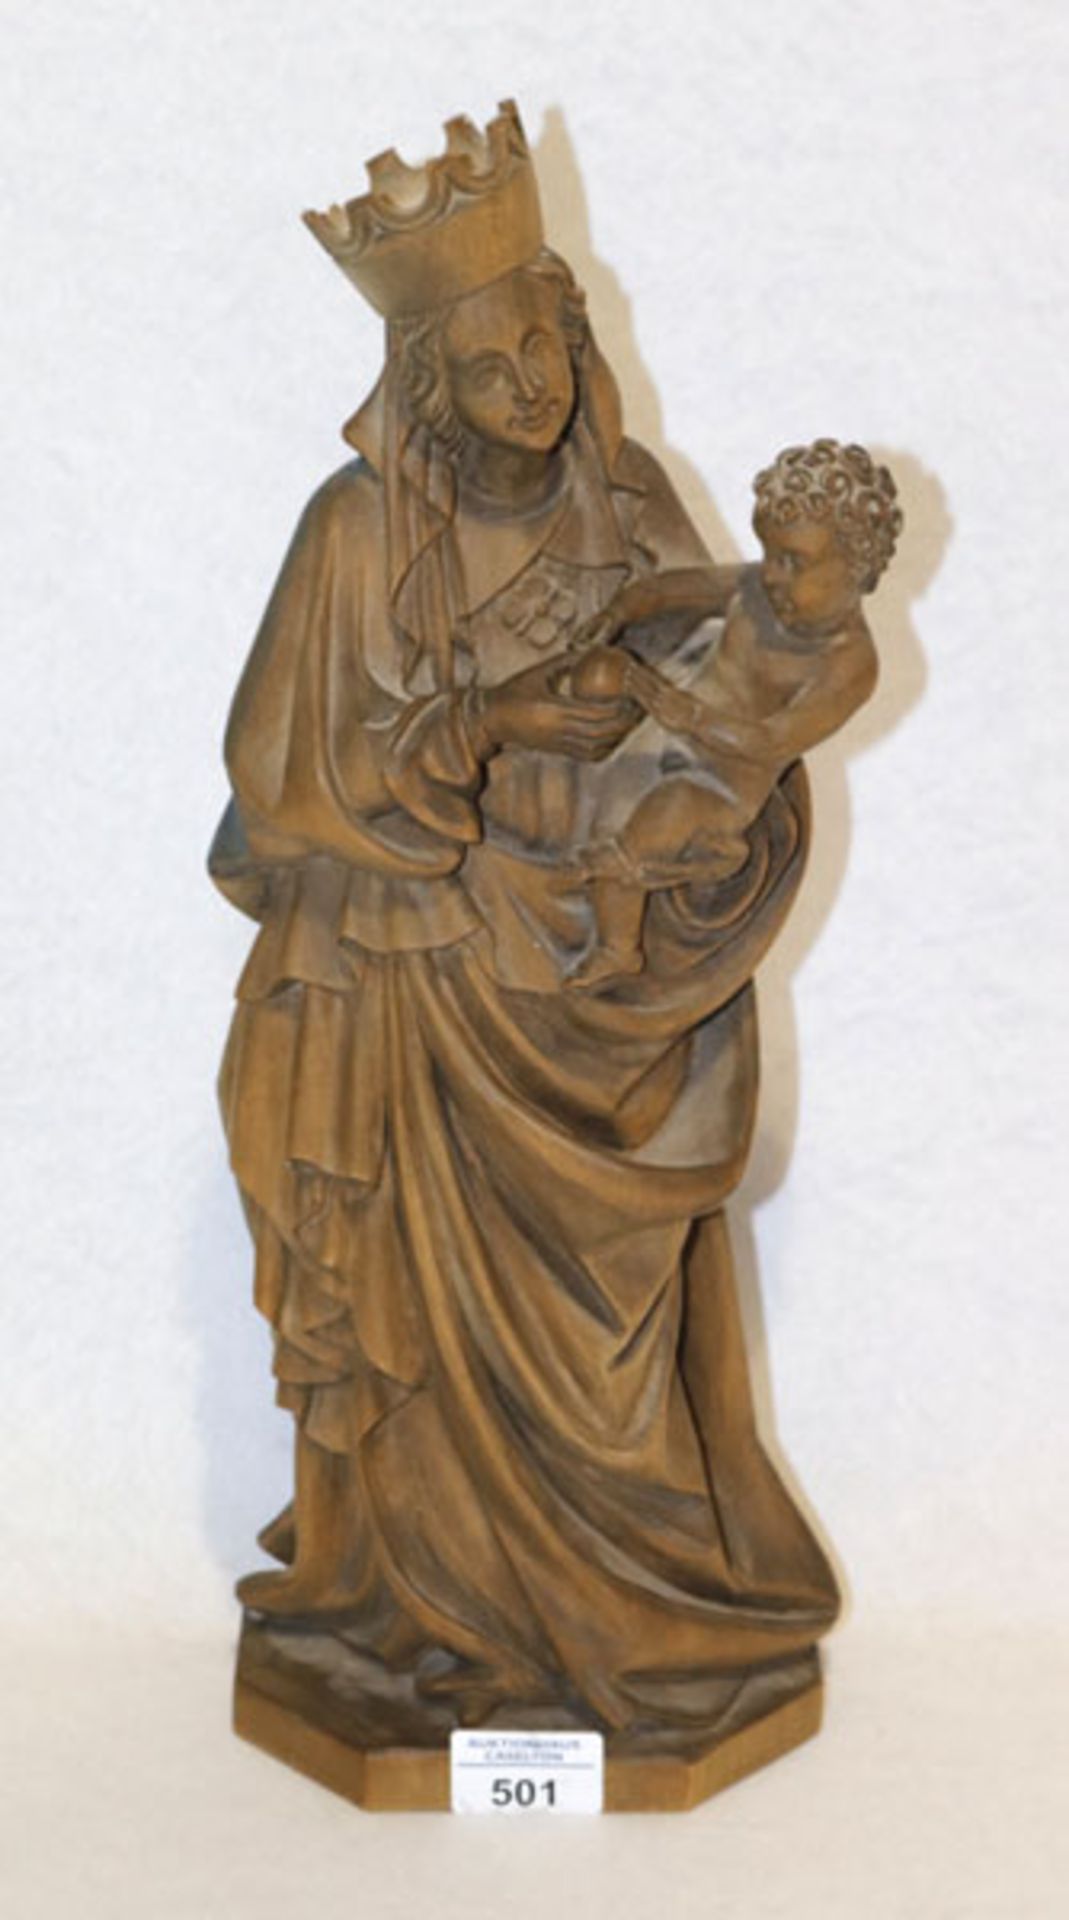 Holz Figurenskulptur 'Maria mit Kind', rückseitig signiert Hans Guggenmoos, dunkel gebeizt, H 42 cm,